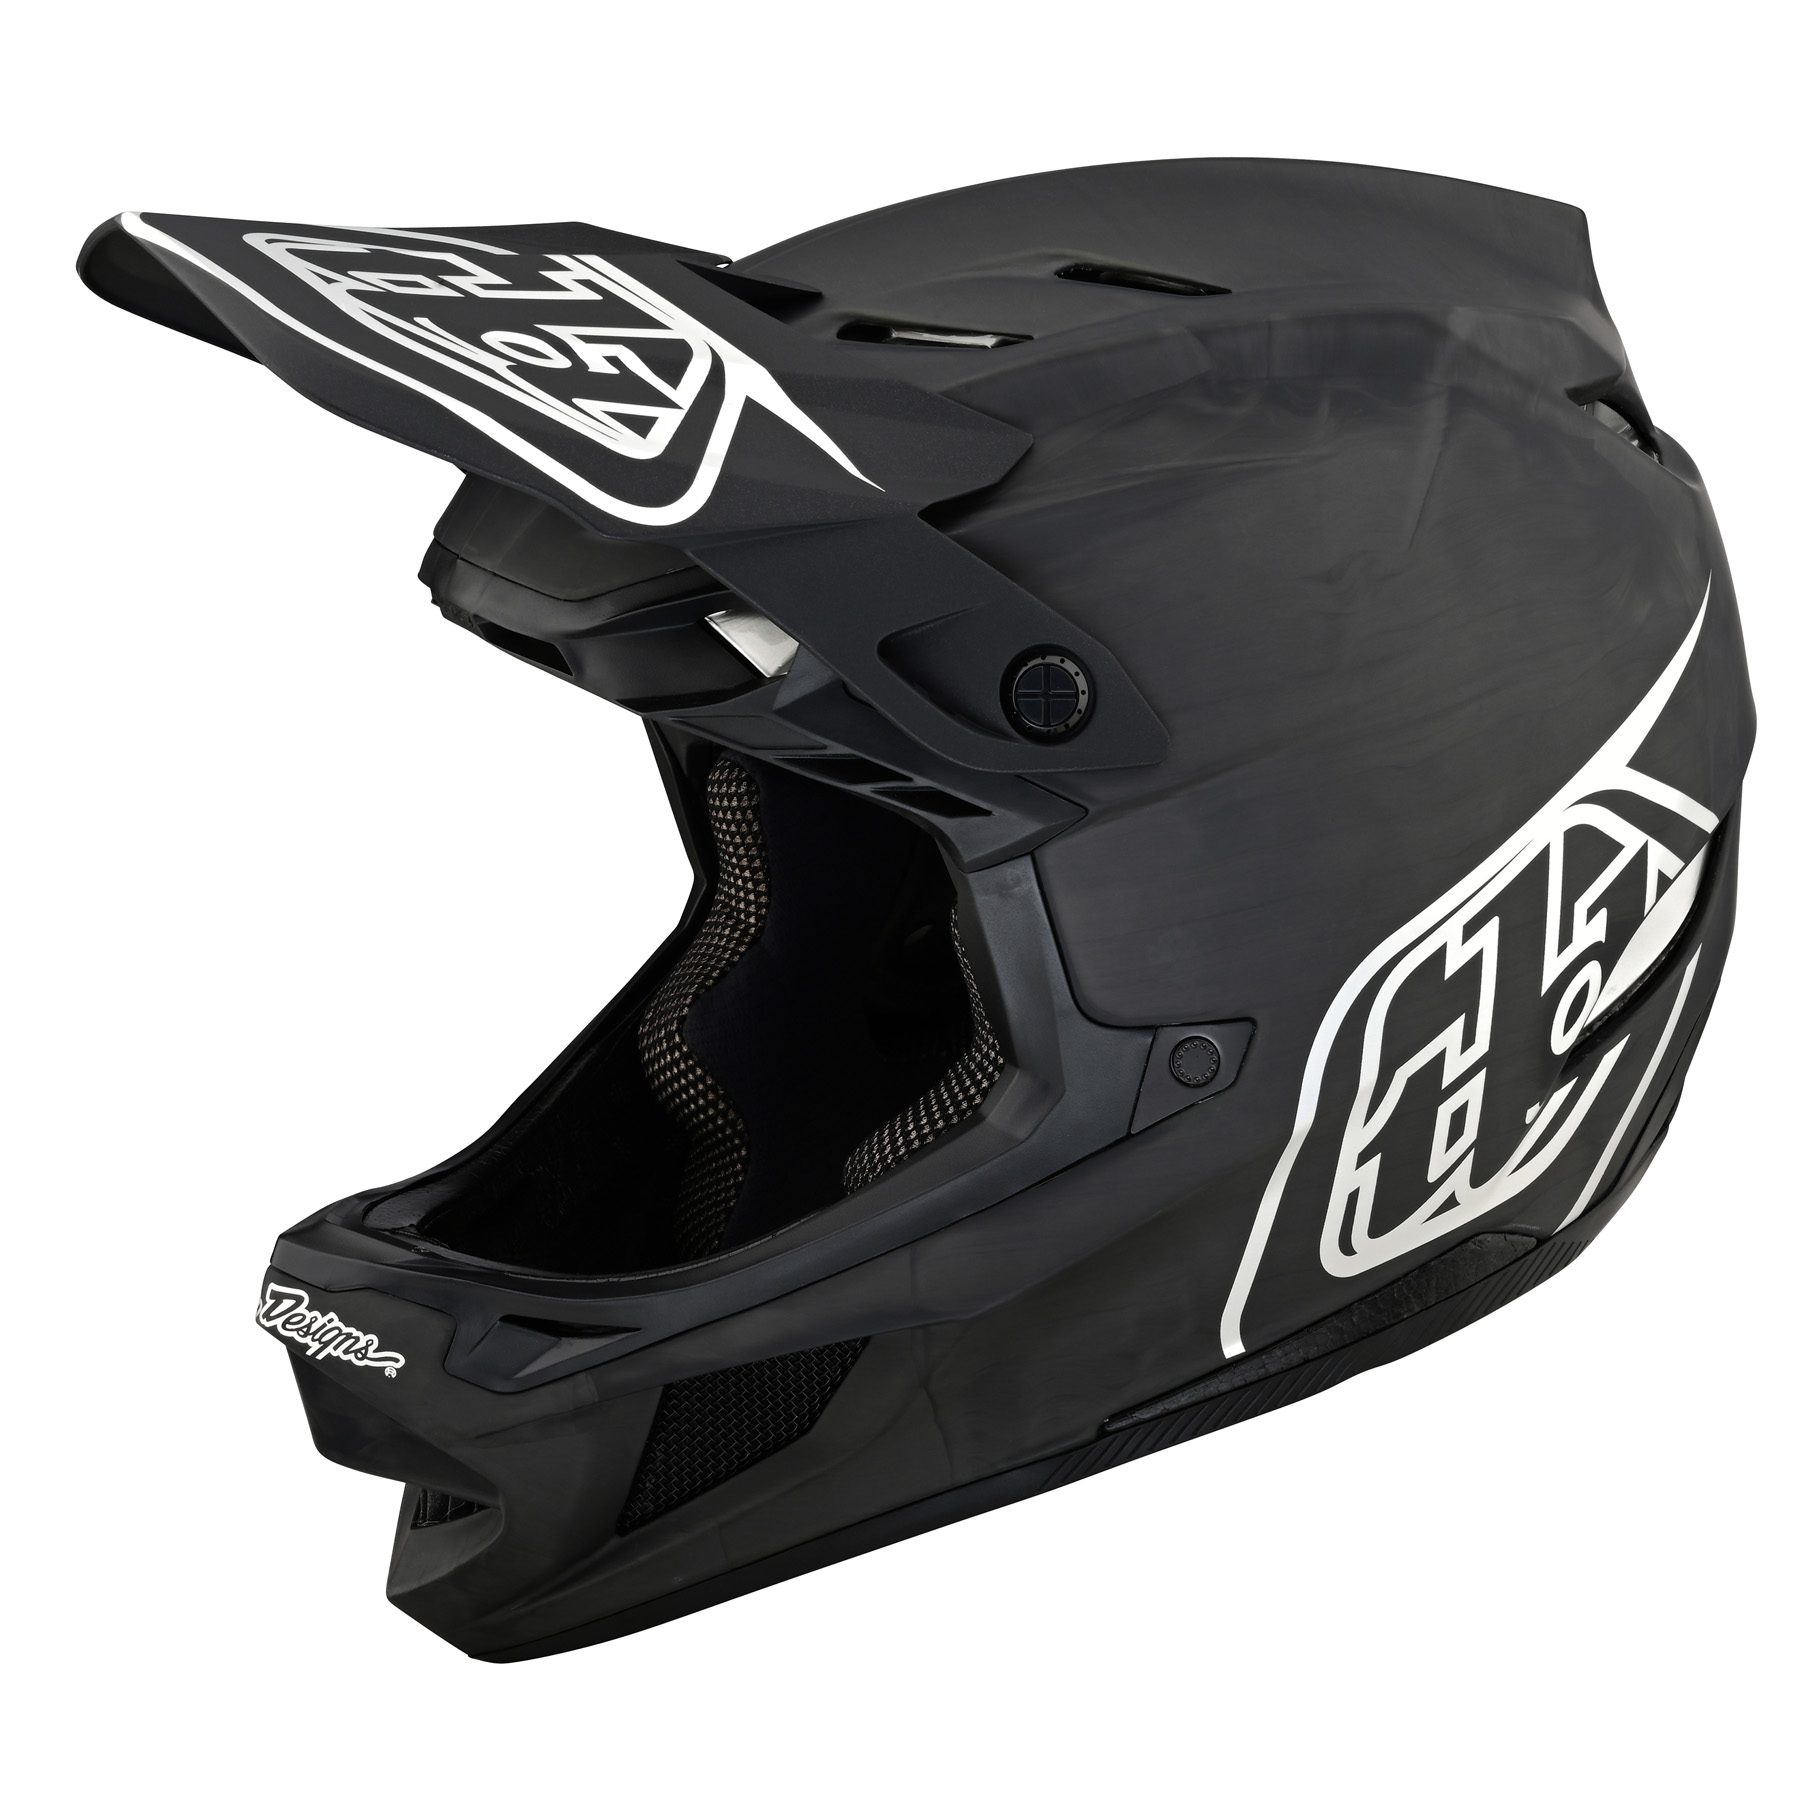 Produktbild von Troy Lee Designs D4 Carbon MIPS Helm - Stealth Black/Silver